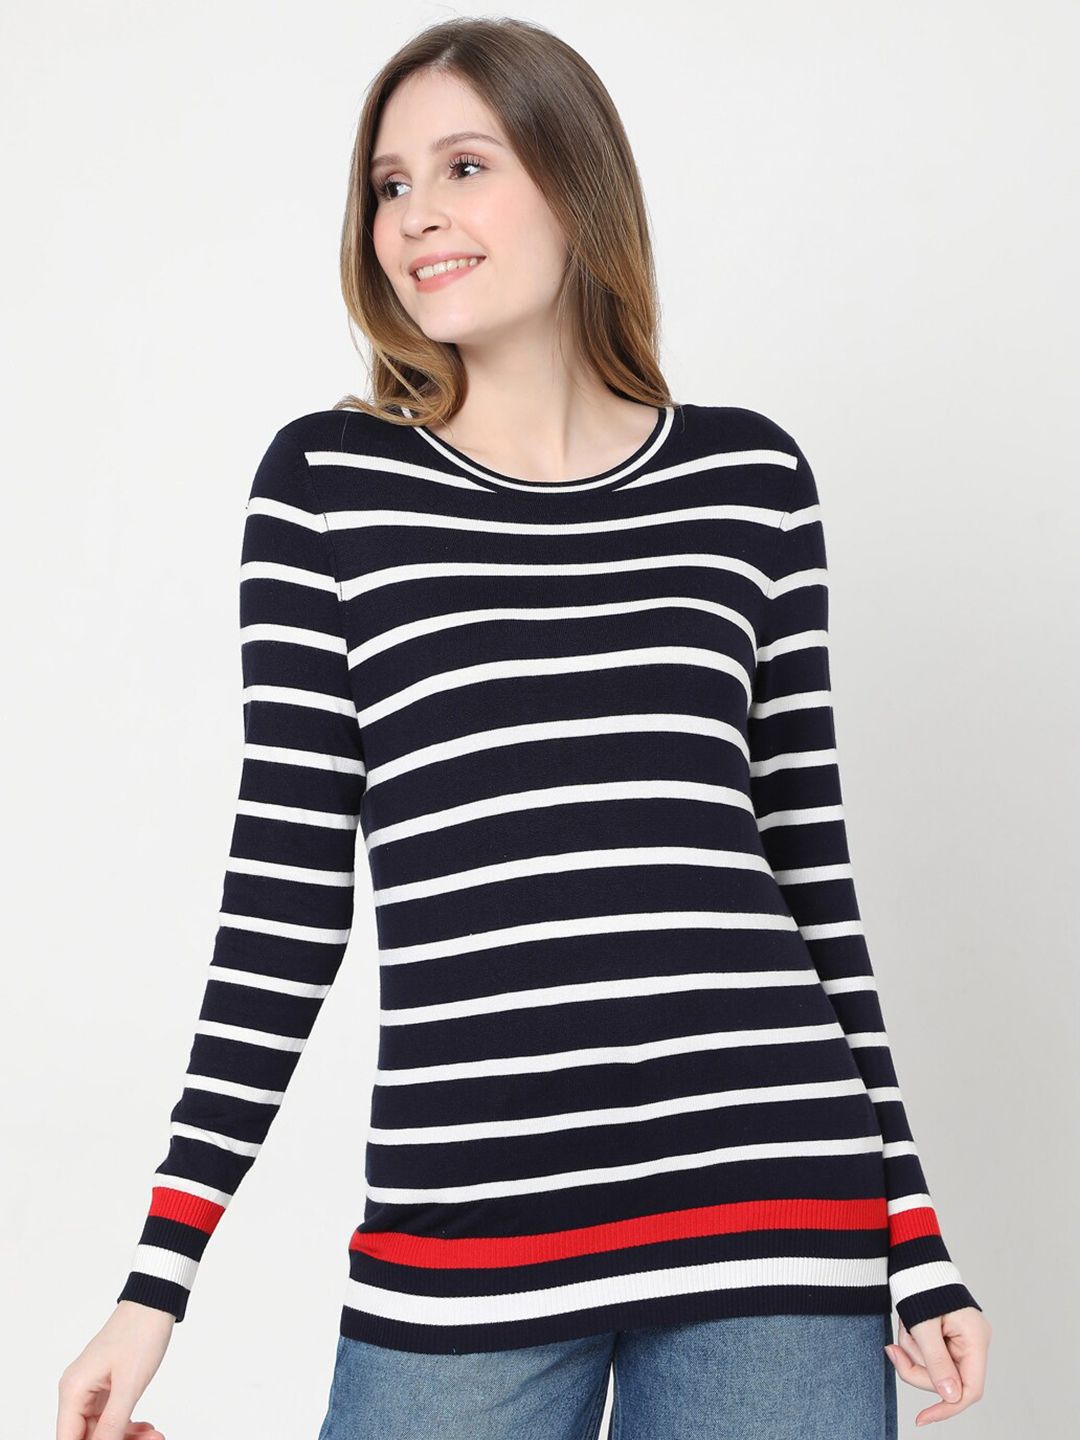 Vero Moda Women Navy Blue & White Striped Pullover Sweater Price in India